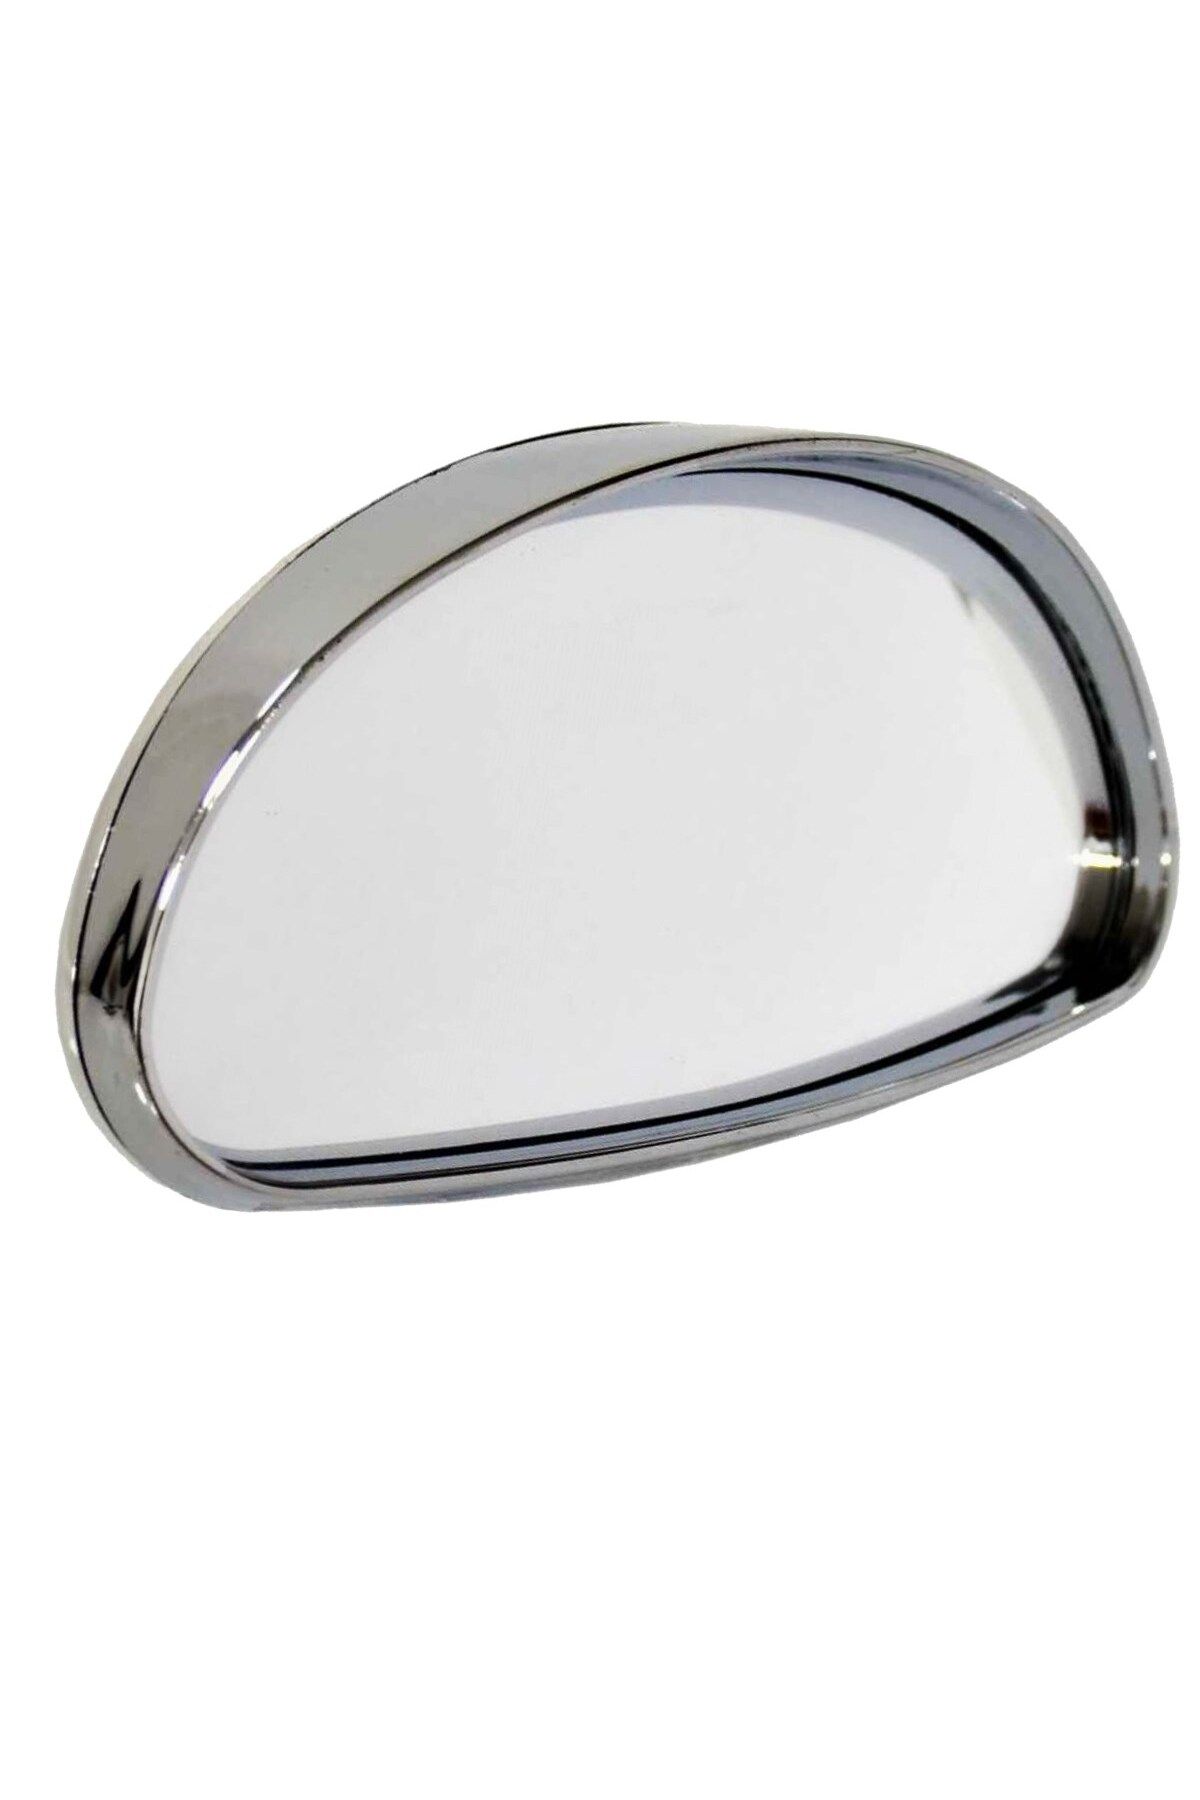 Carub Hko dıs Dikiz Ilave Ayna Egitmen Aynası Krom 14cmx7.5cm